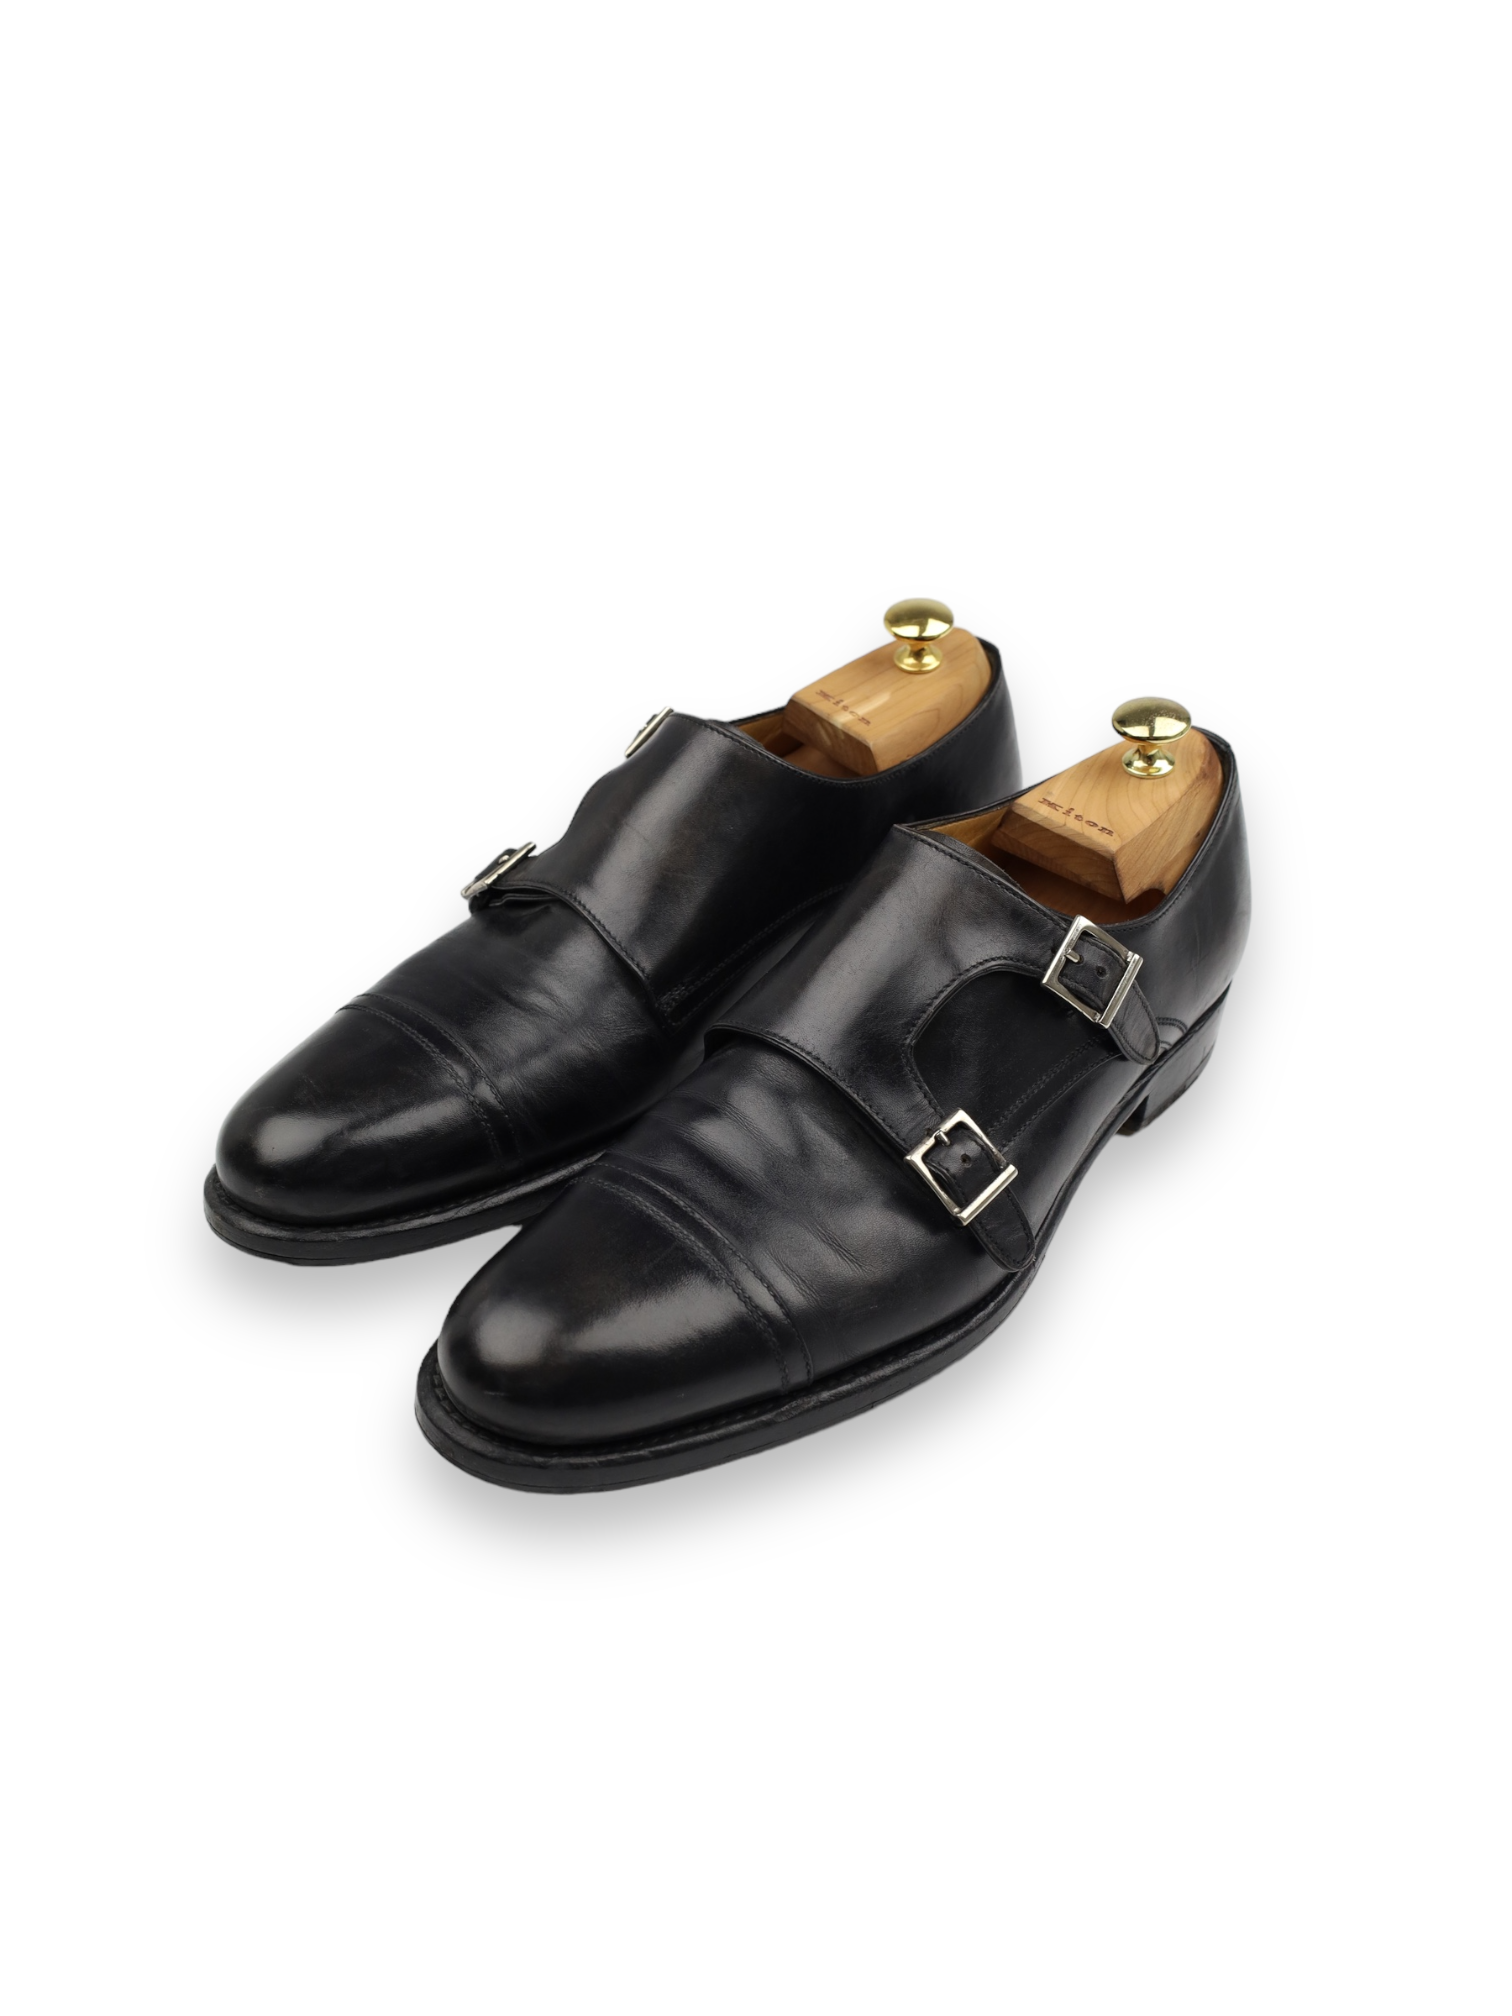 Kiton Black Double-Monk Shoes